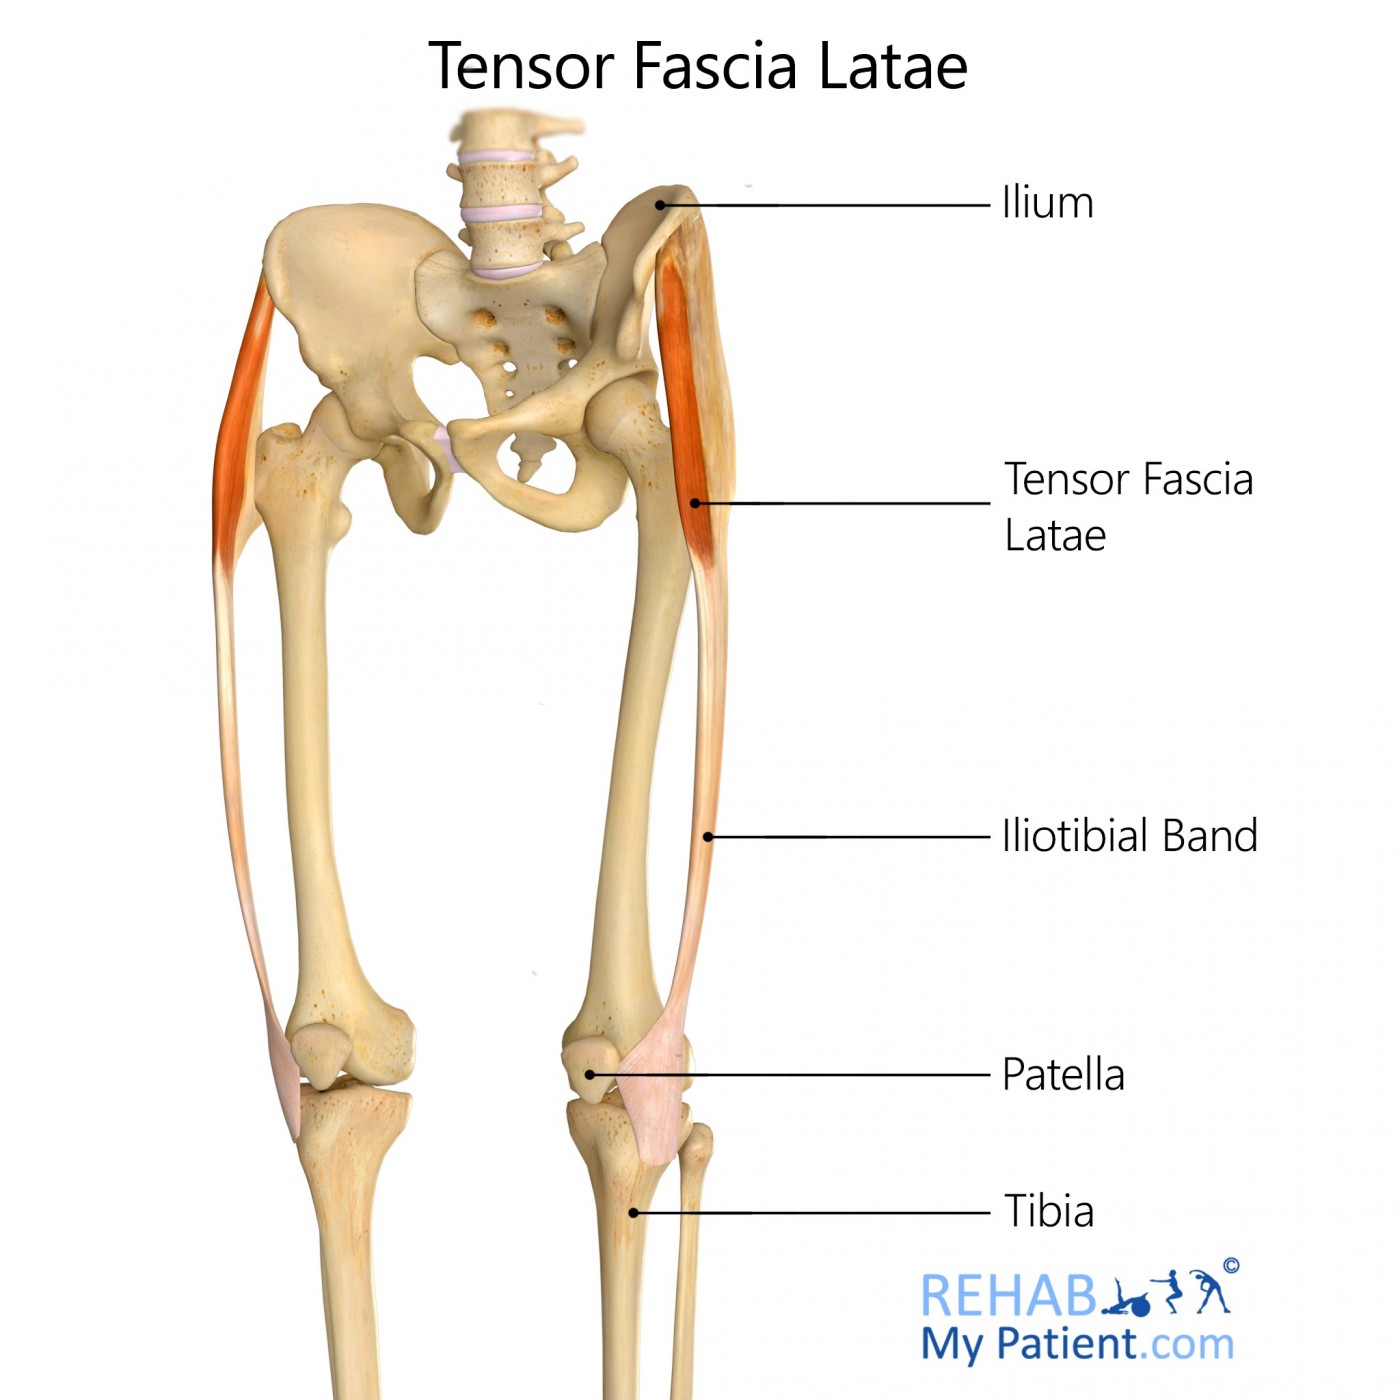 Tensor fascia lata: iliac crest, ASIS (origin) lateral condyle of